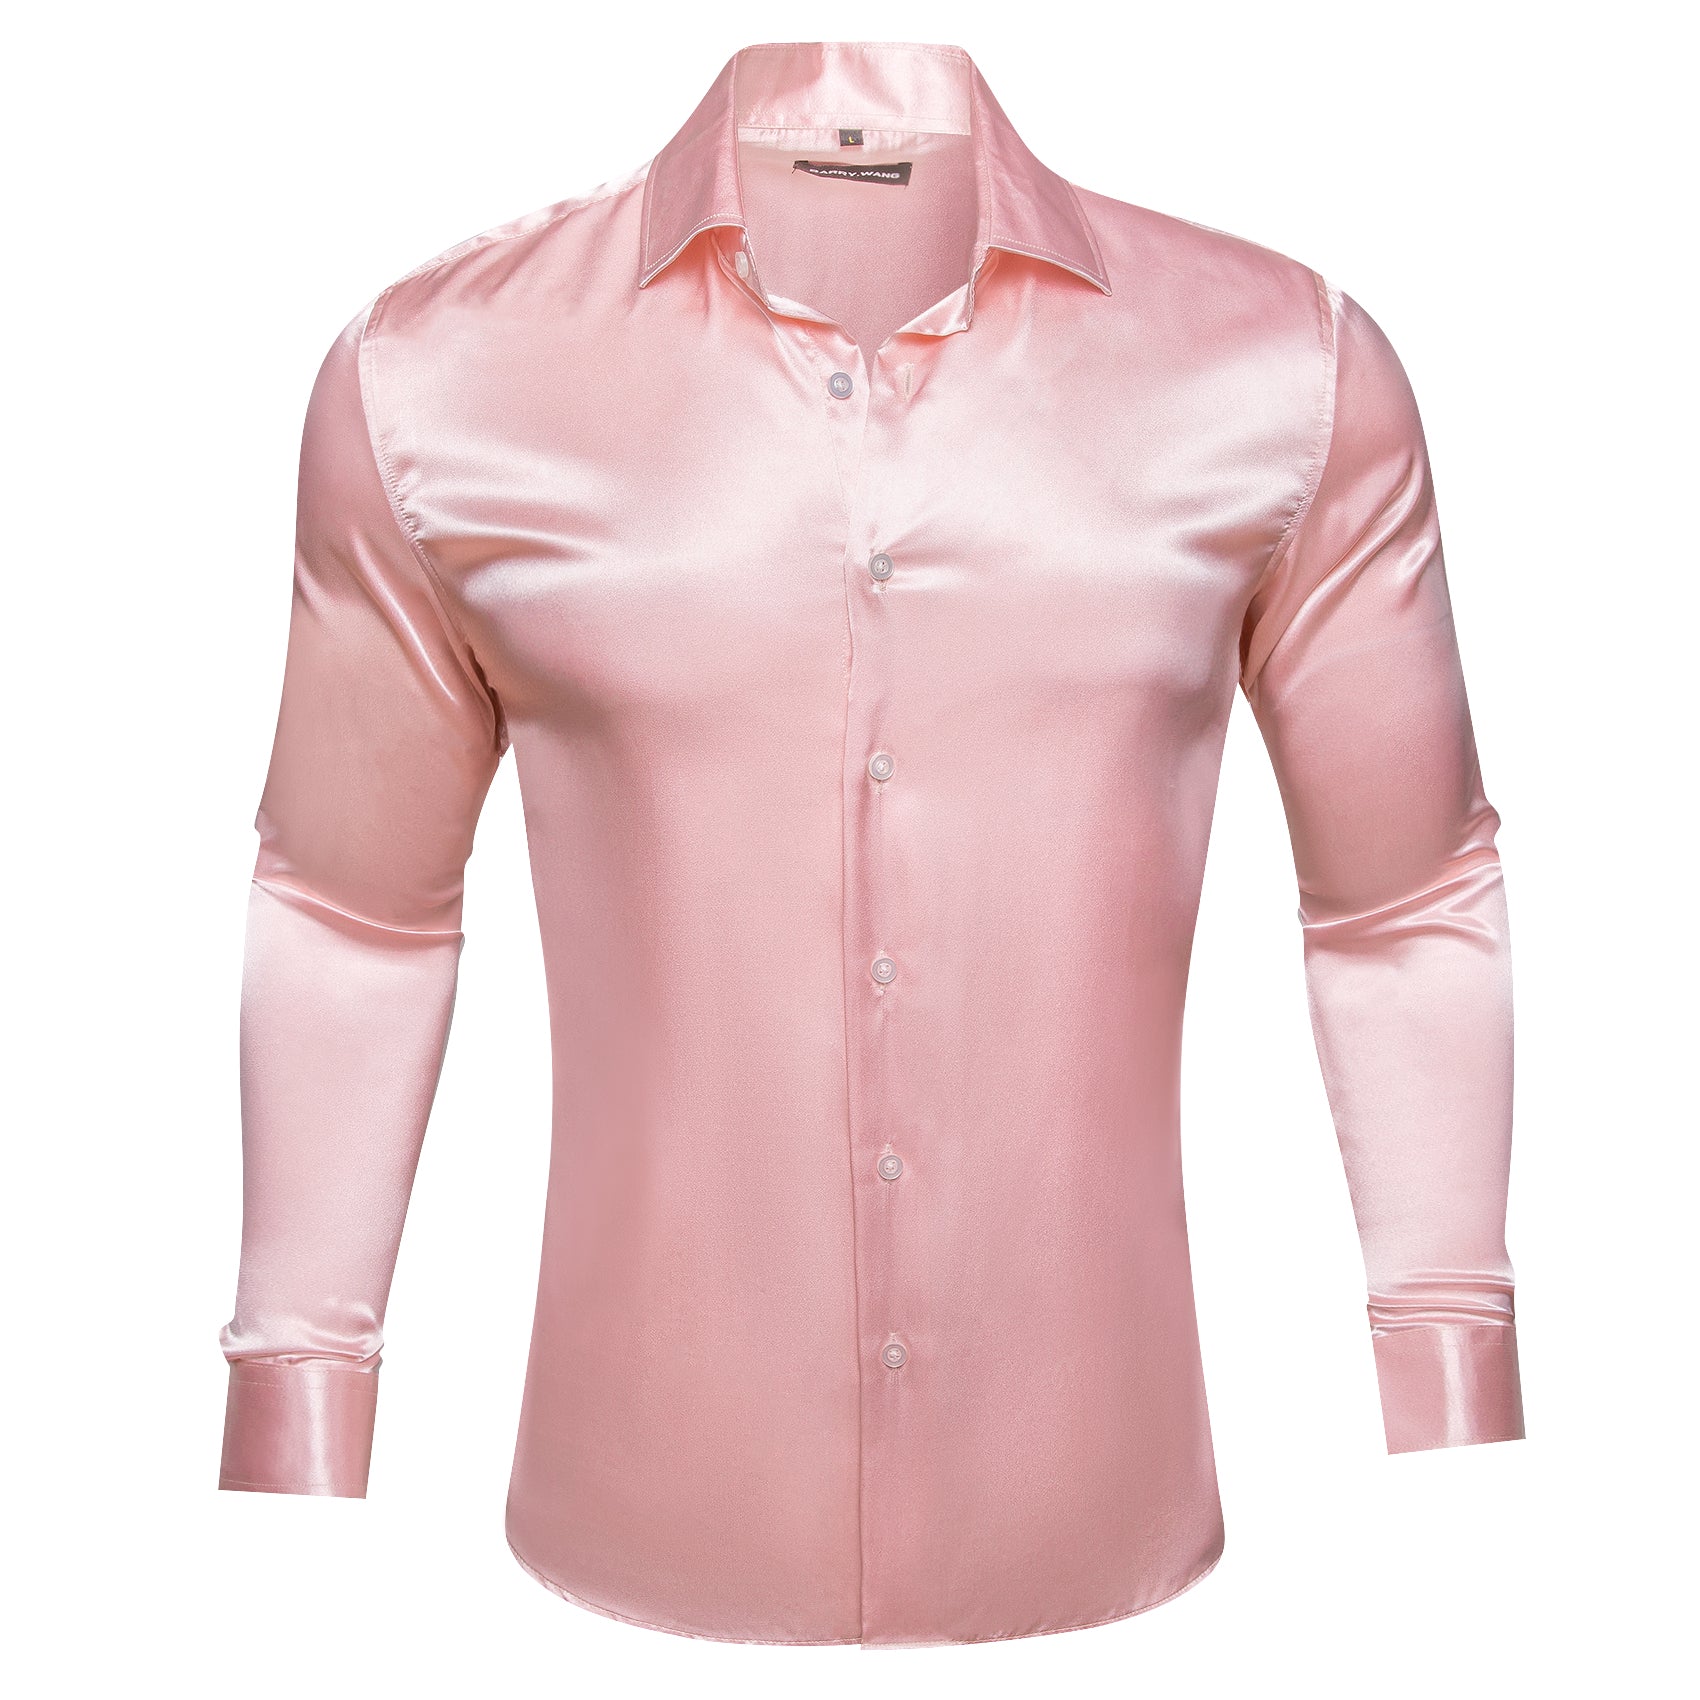 Barry.wang Fashion Pink Solid Silk Shirt